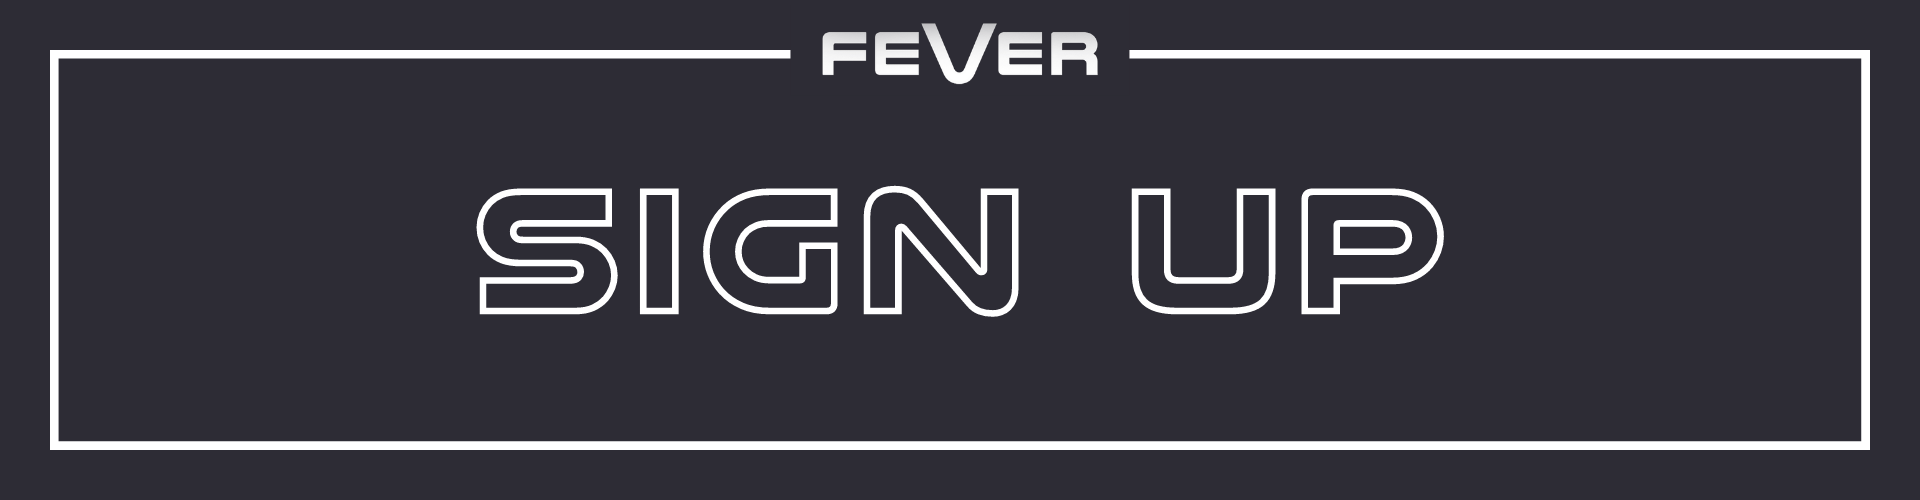 Sign Up to Fever Newsletter